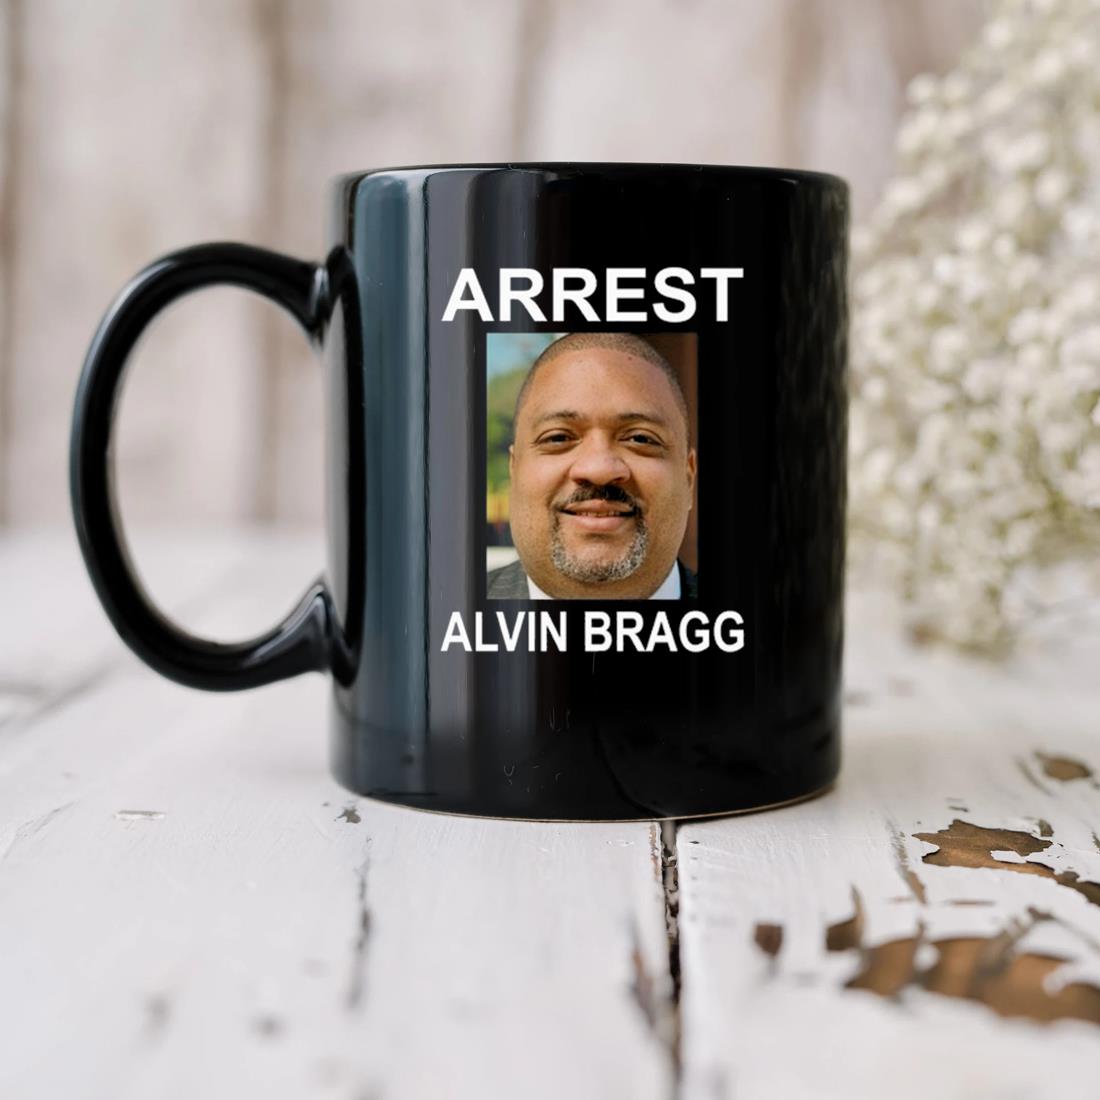 Tuckfrump Arrest Alvin Bragg Mug biu